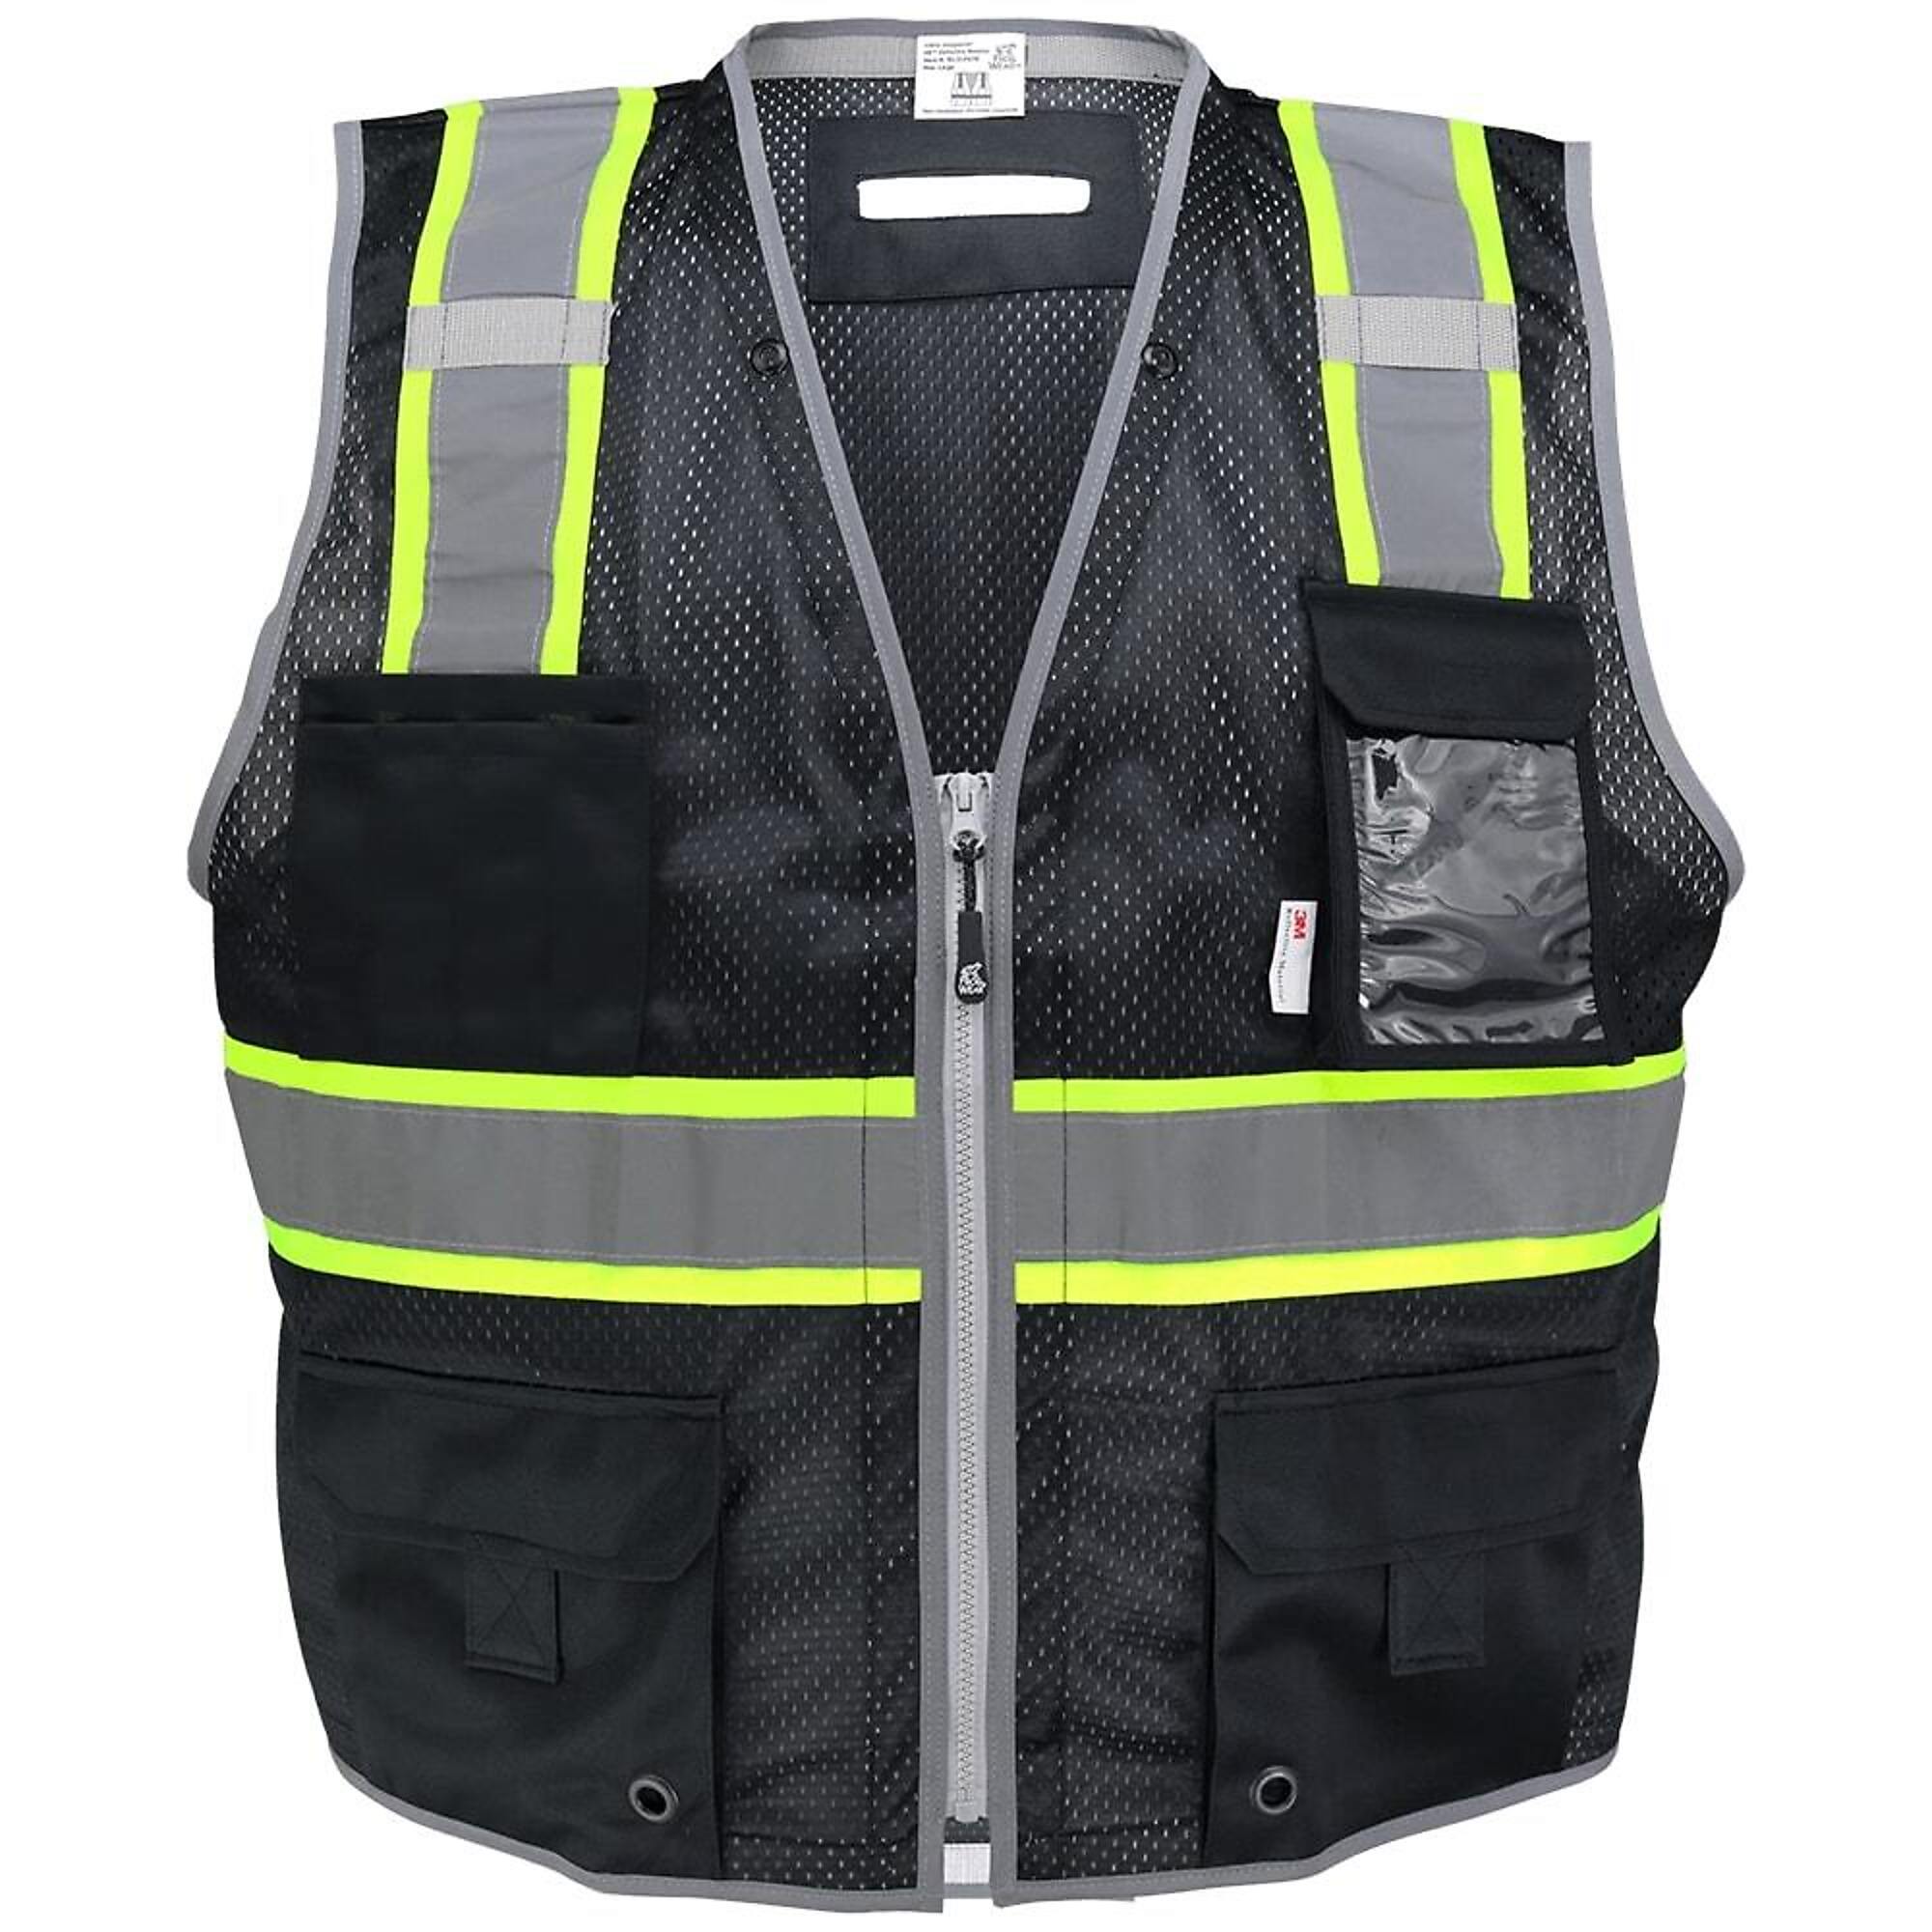 FrogWear Enhanced Visibility Safety Vest, S, Black, Model GLO-067K-S